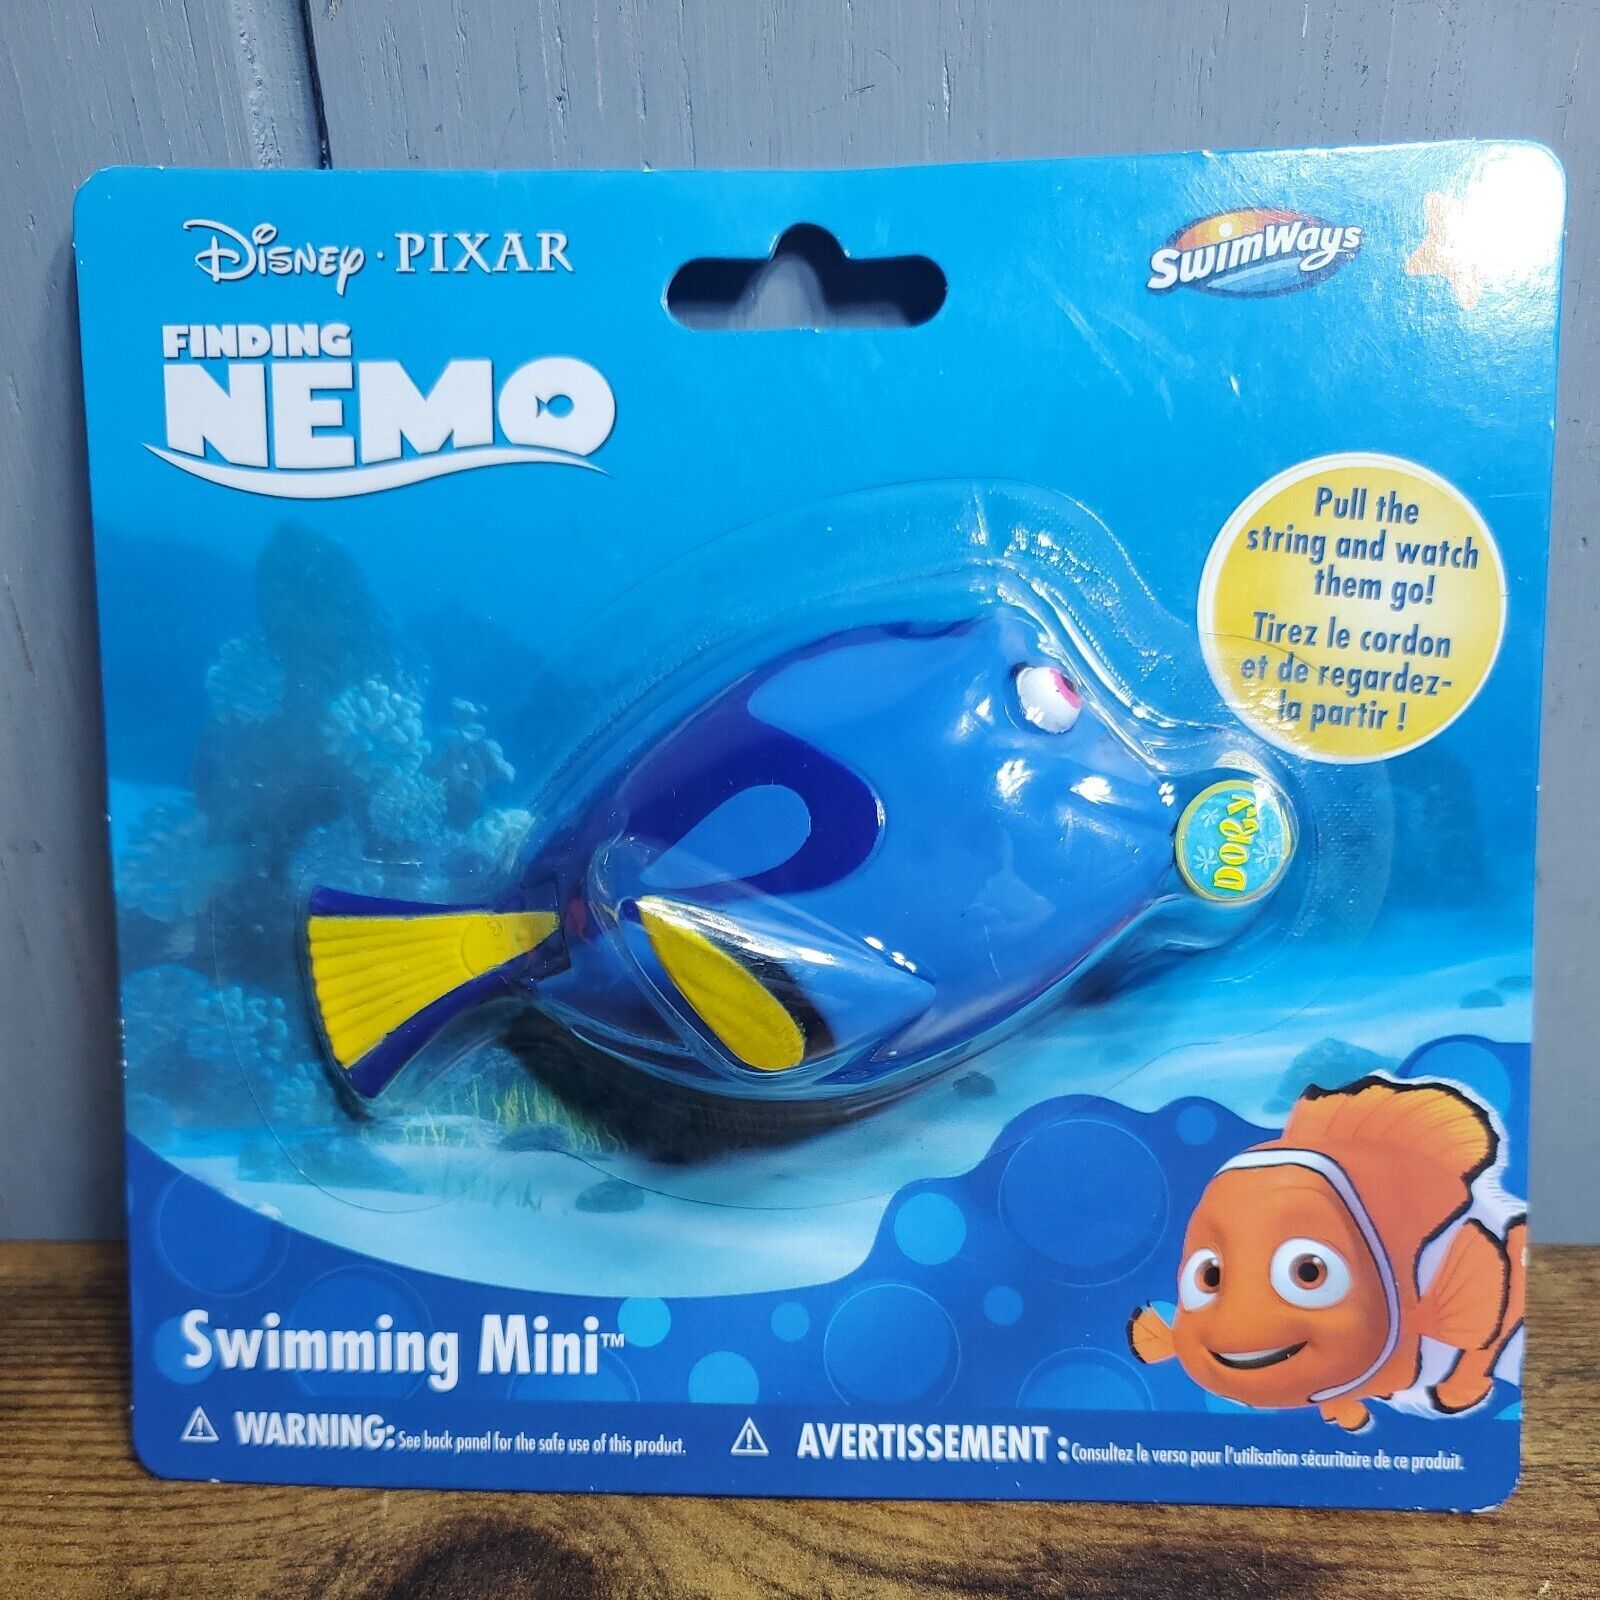 Swimways Disney Pixar Finding Nemo Swimming Mini Dory Pull String Water Toy Water Toys 2219